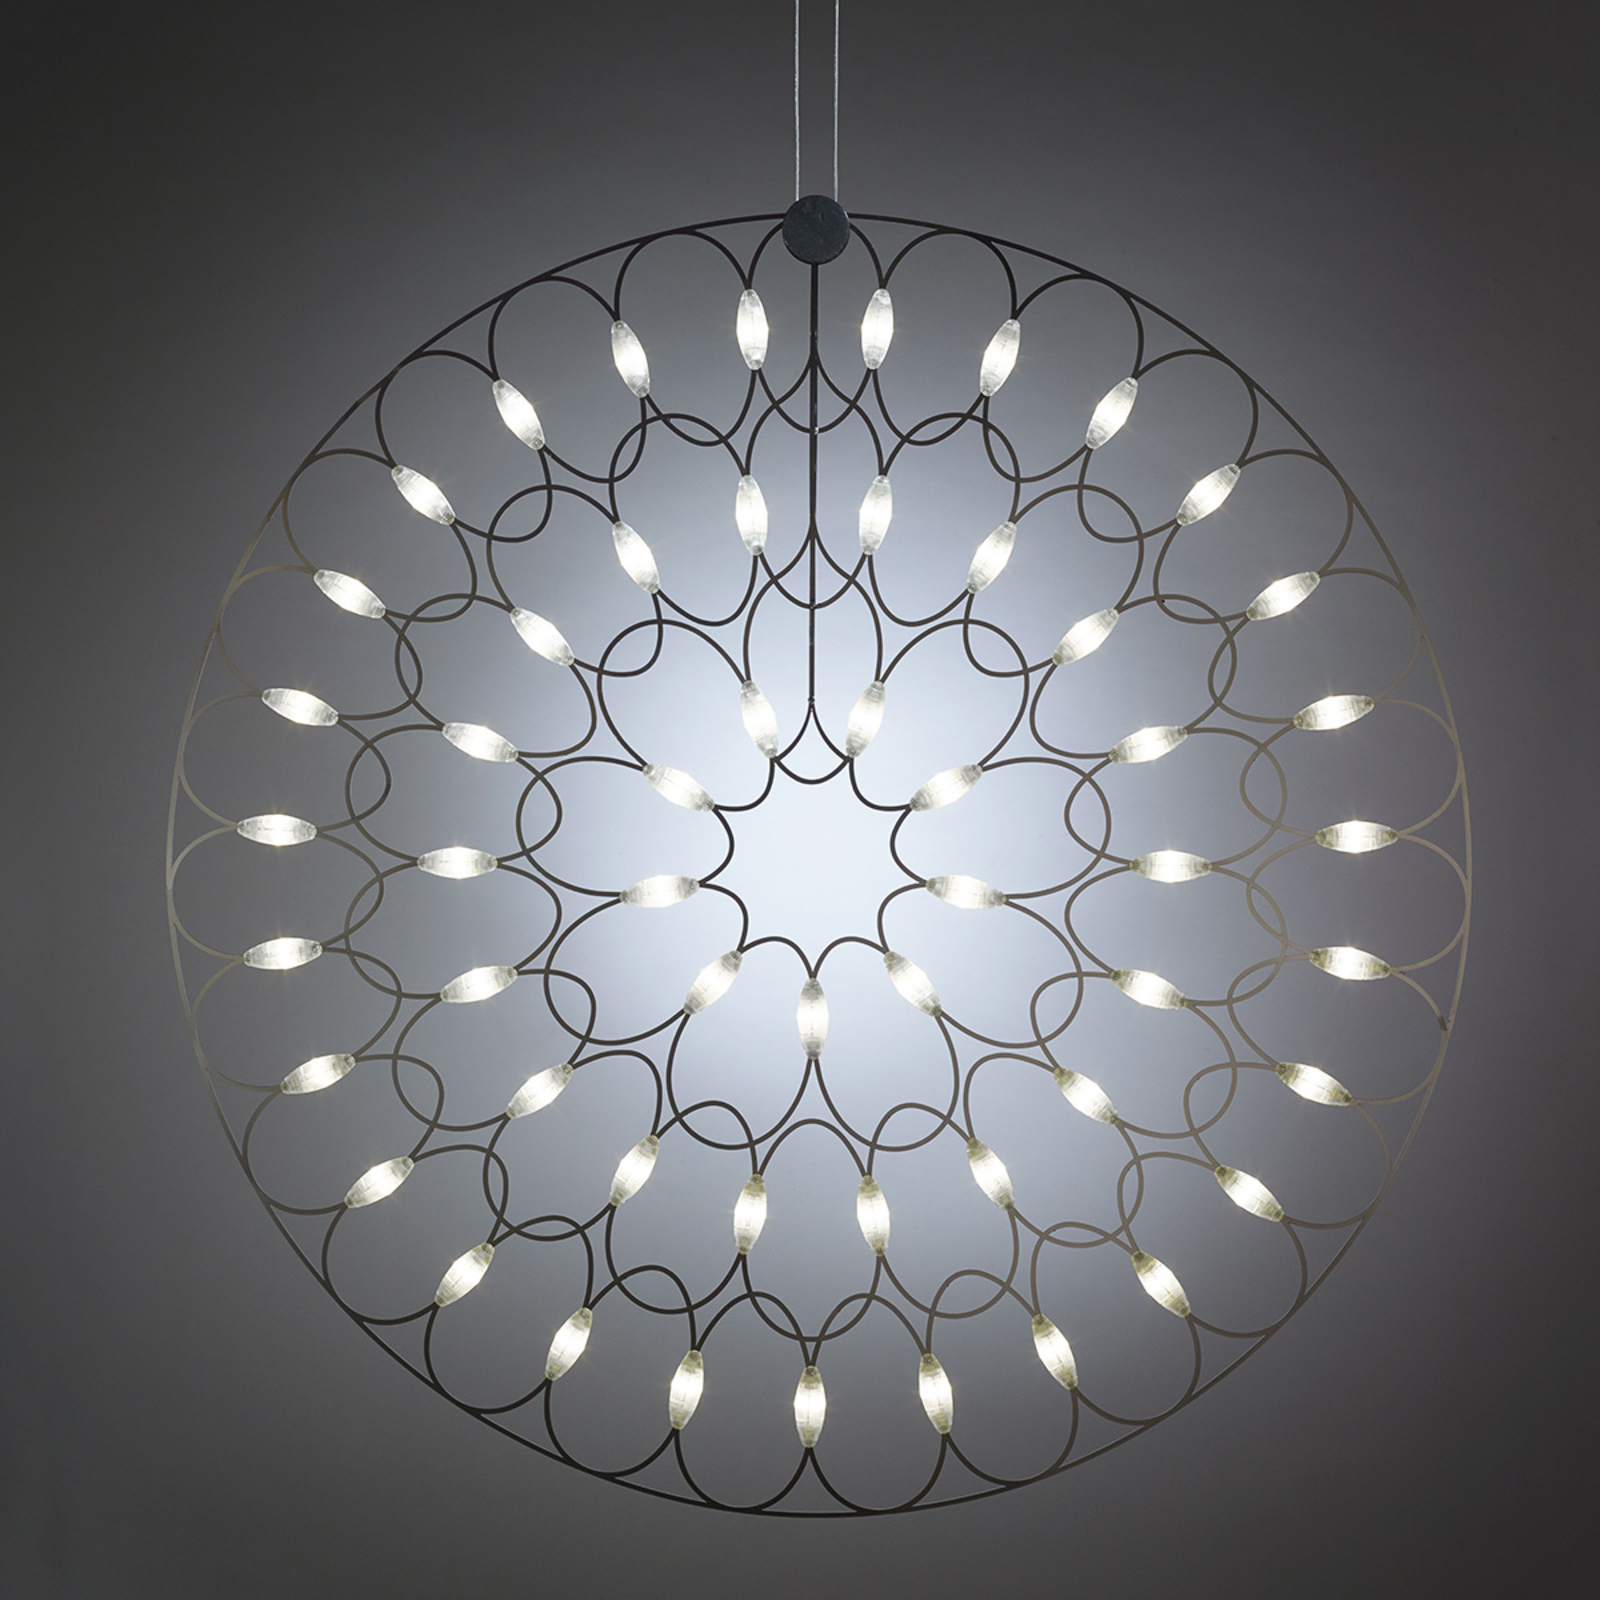 Lafra - an LED pendant light like a mandala